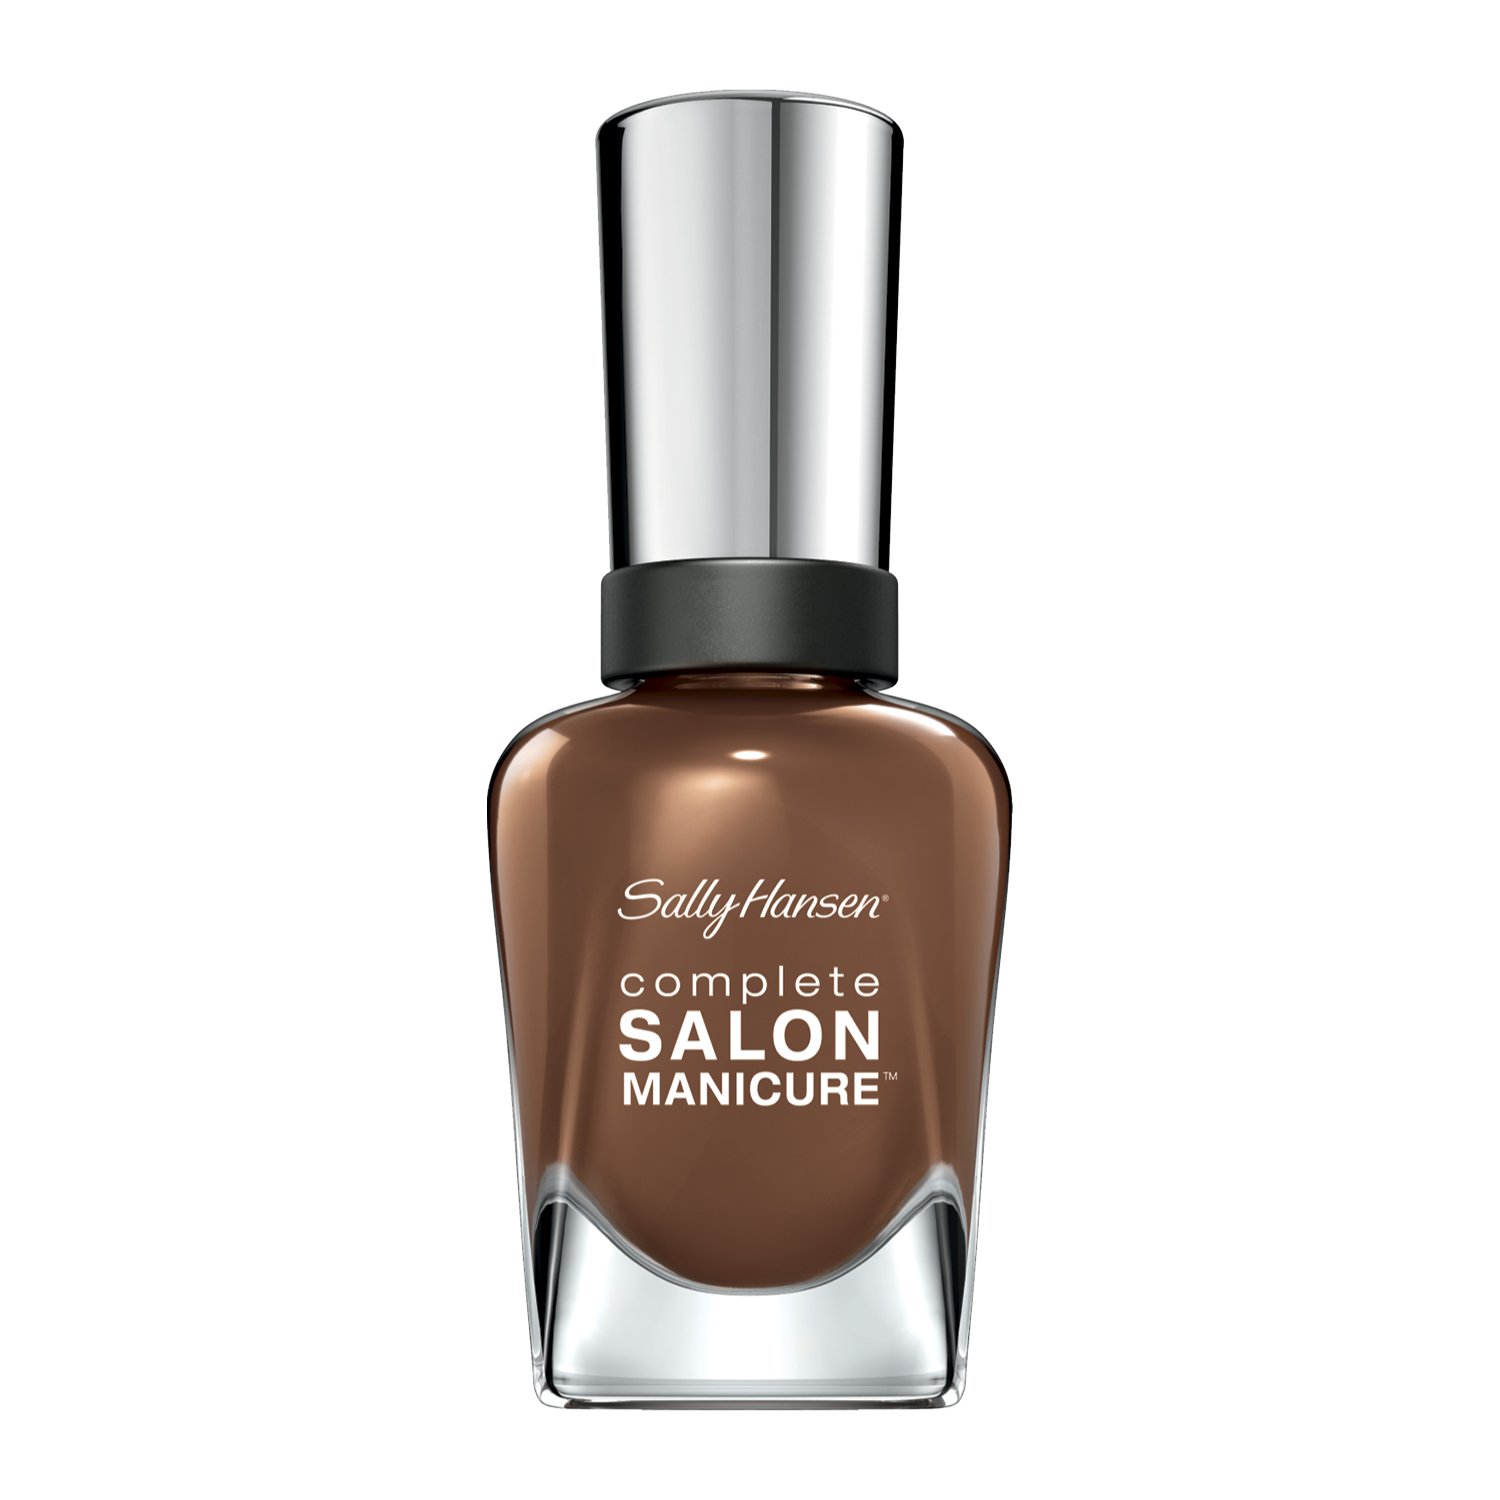 Sally Hansen Complete Salon Manicure Nail Polish, All Bark - image 5 of 5